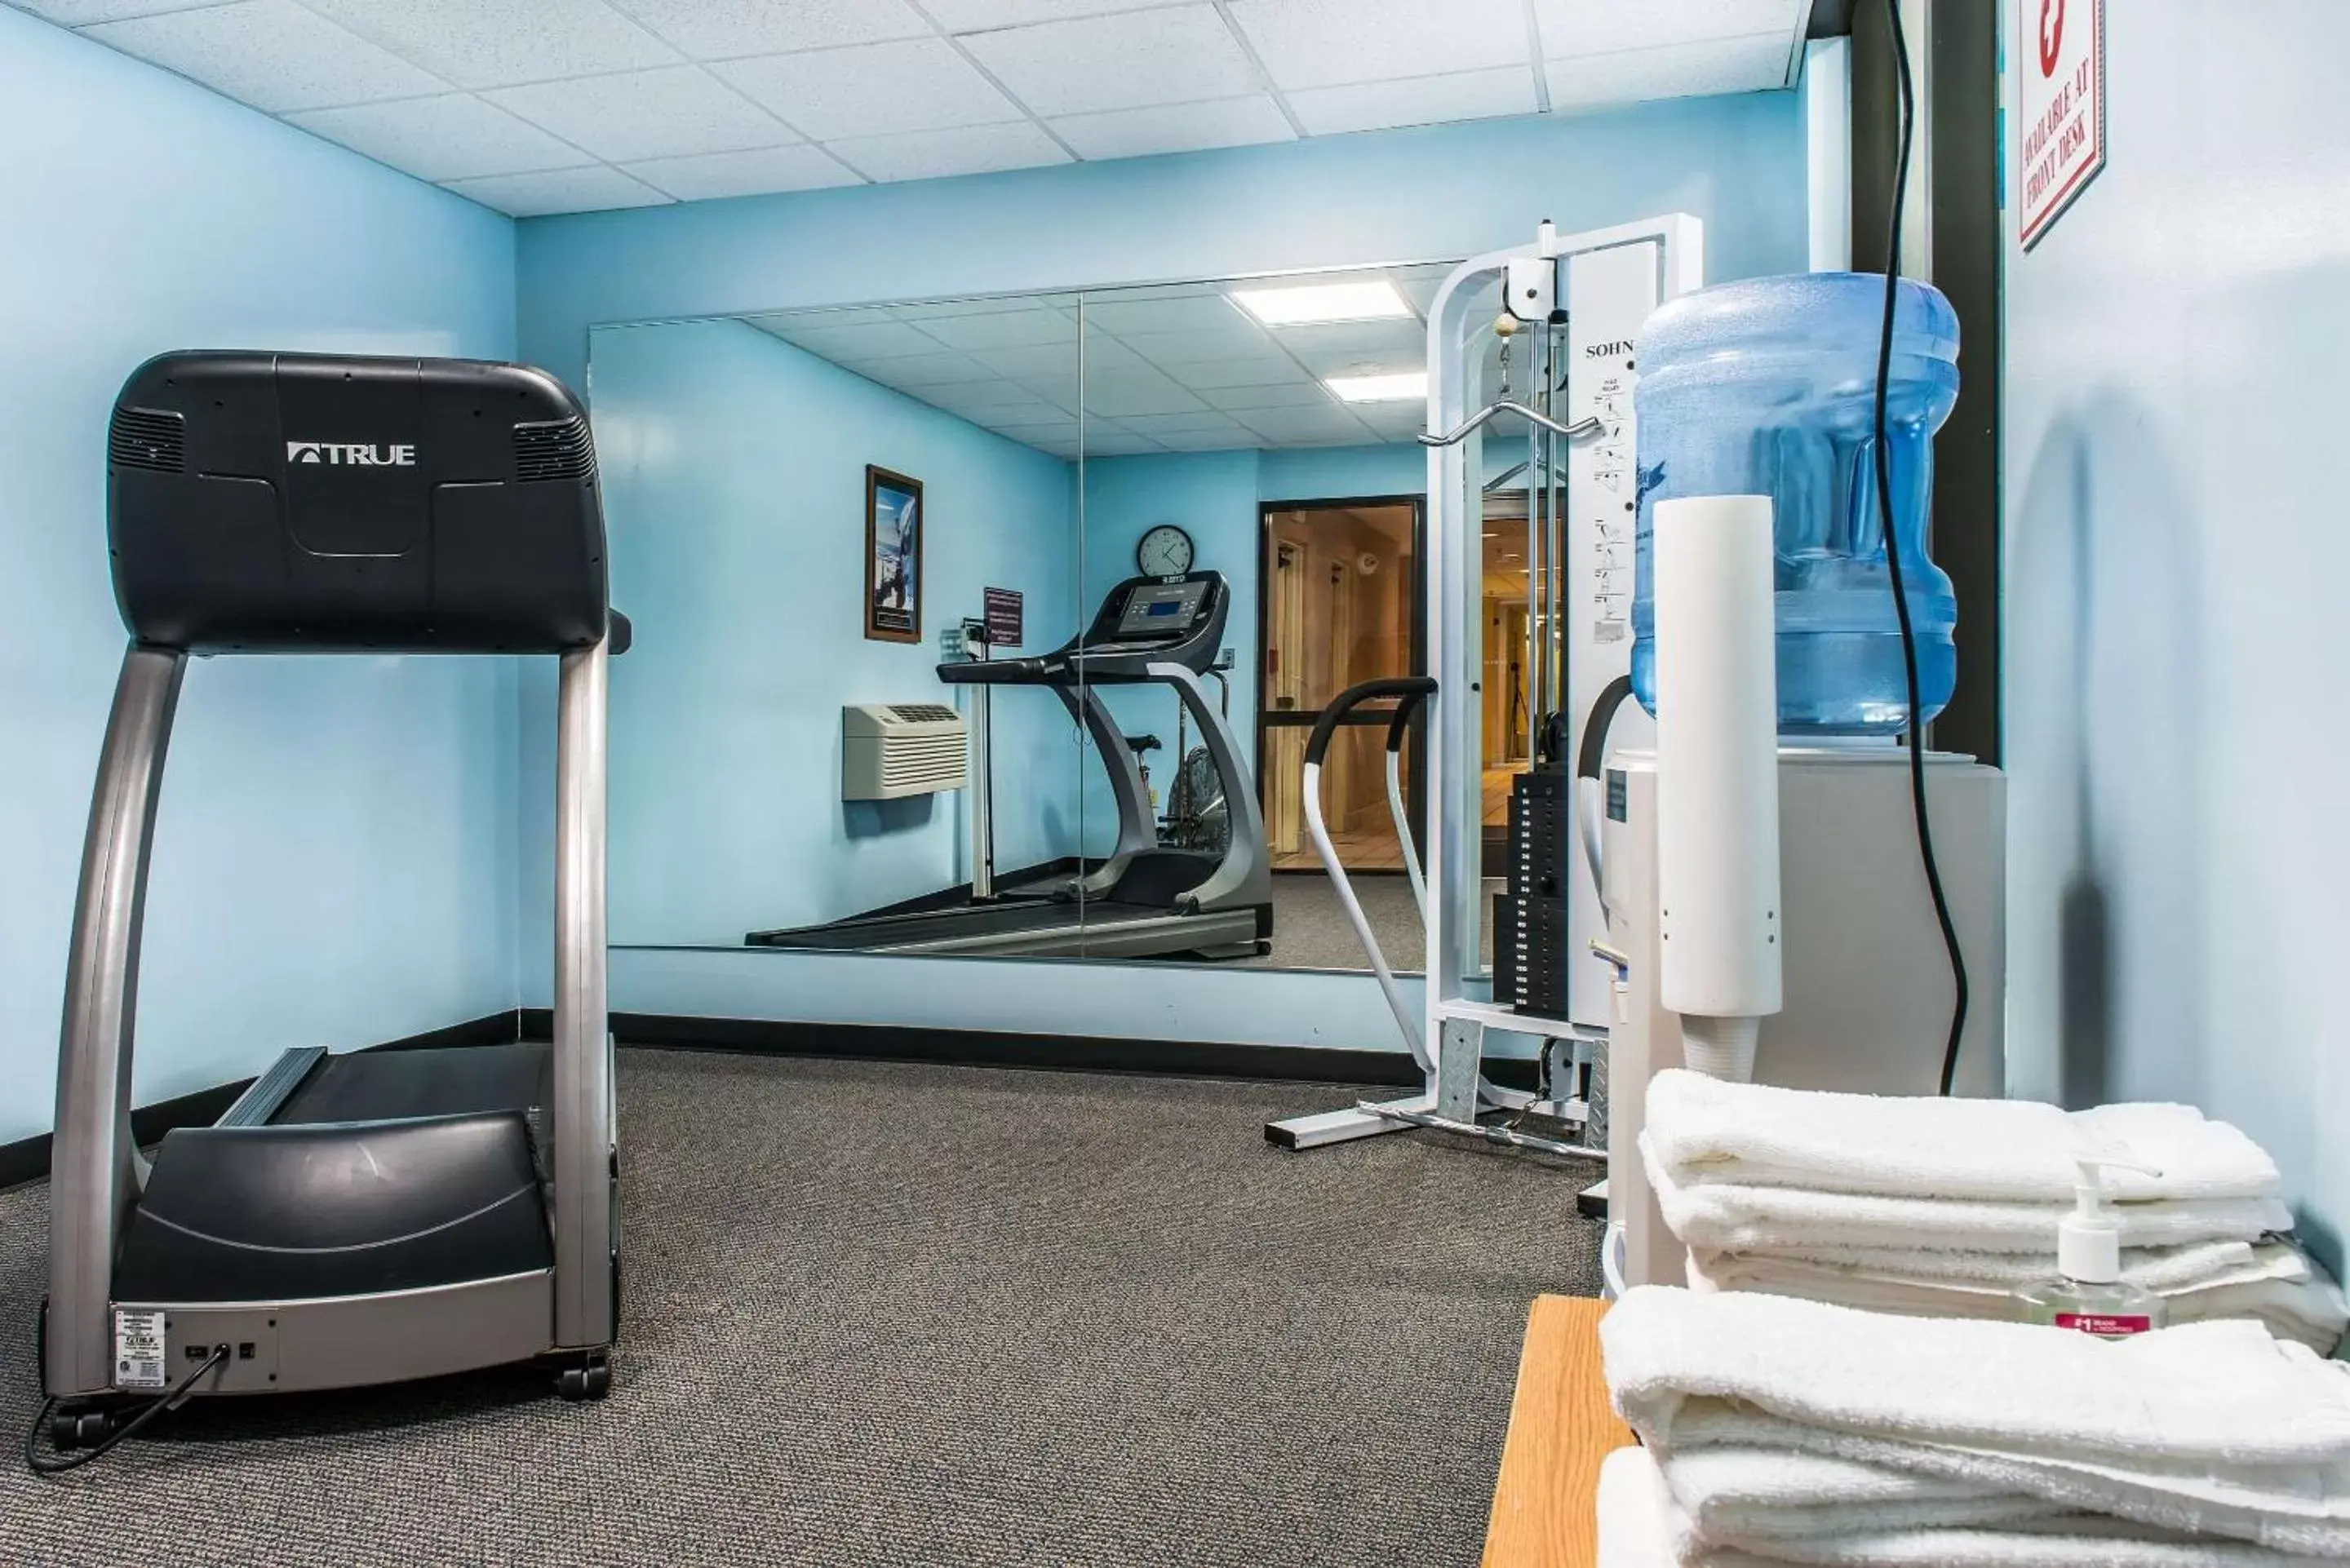 Fitness centre/facilities, Fitness Center/Facilities in Comfort Inn Ebensburg